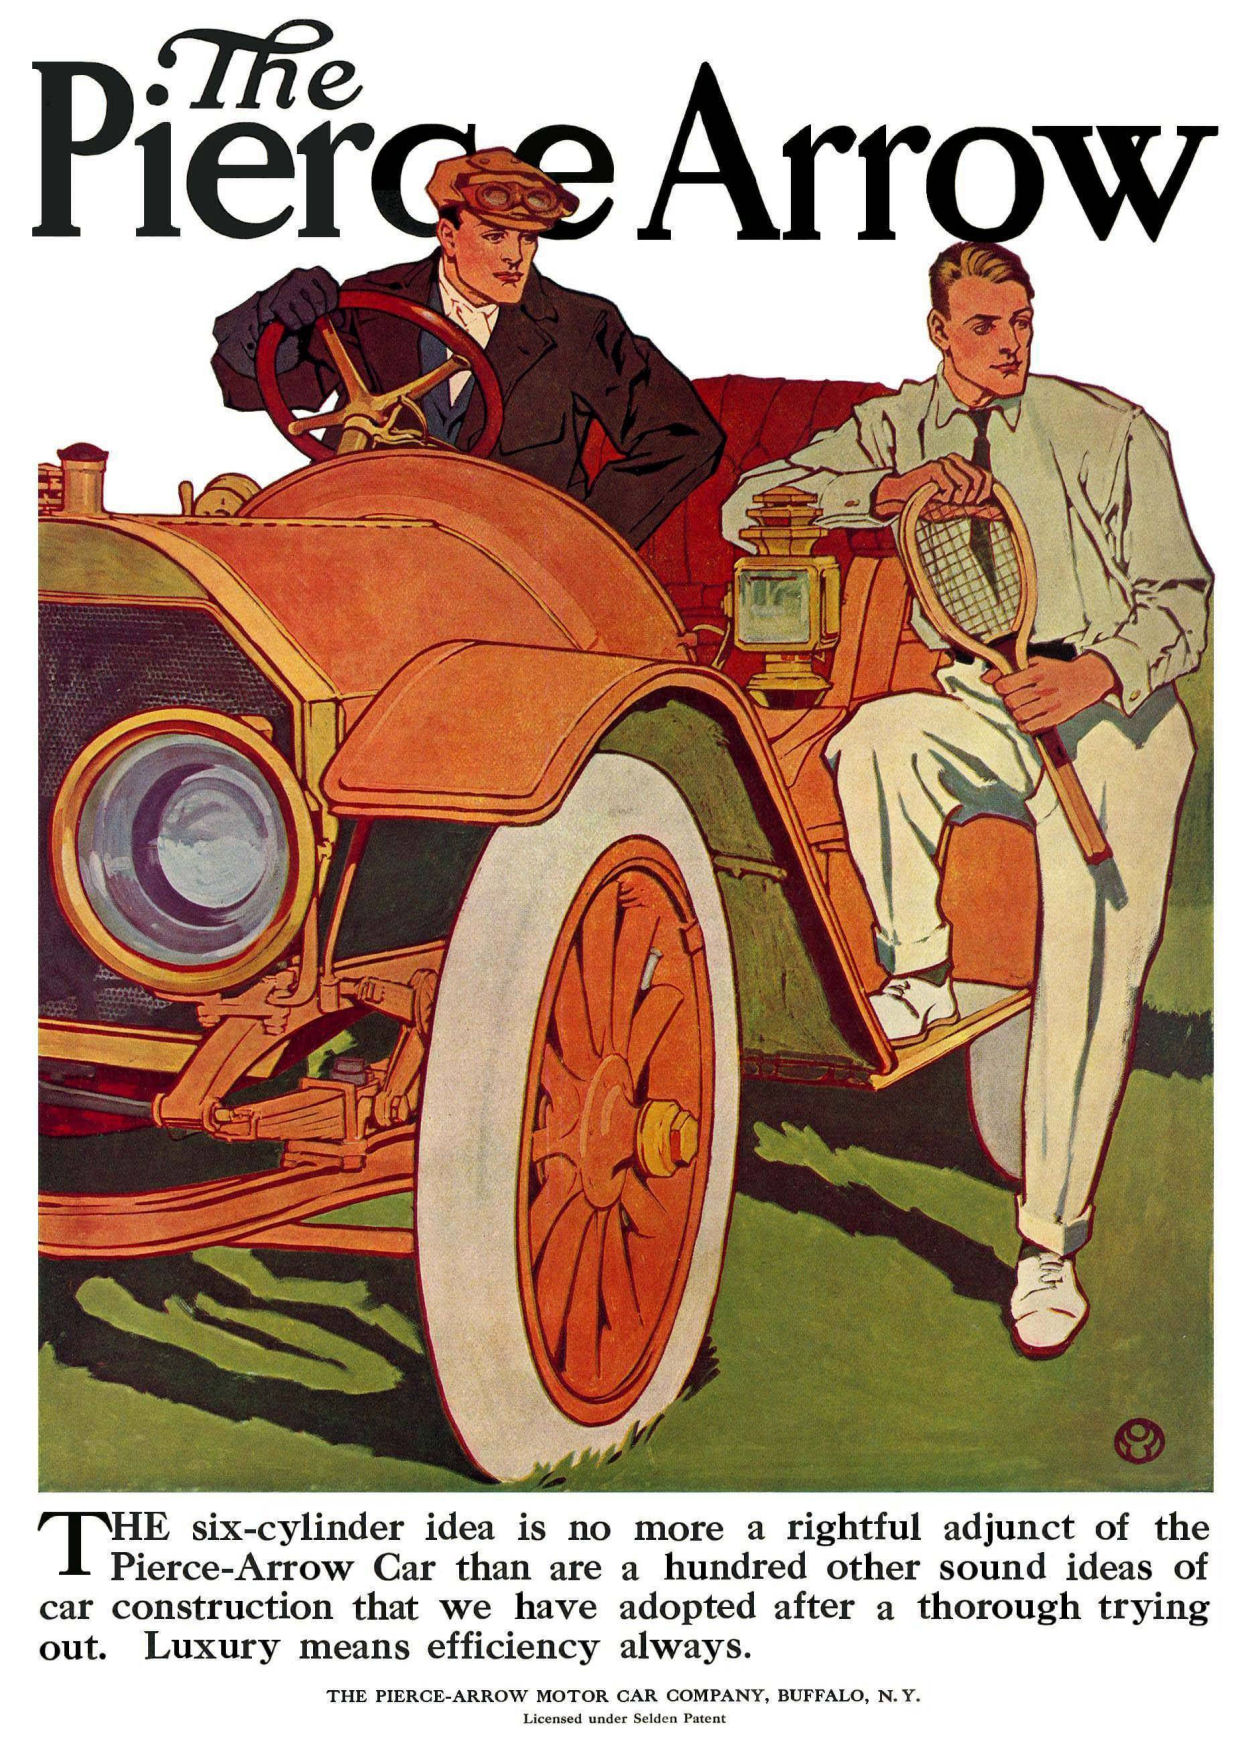 1910 American Auto Advertising